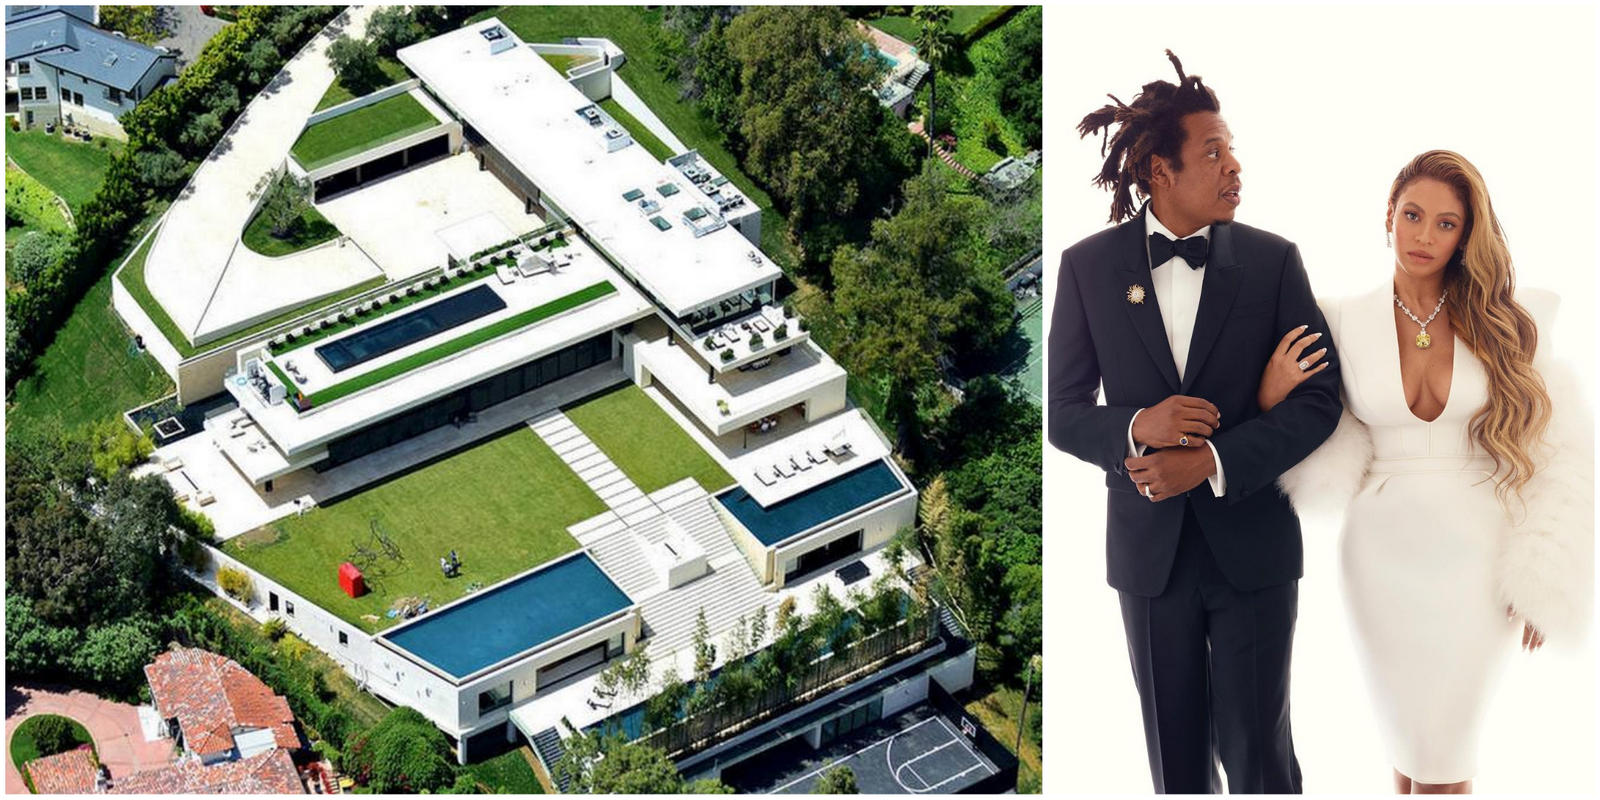 Jay-Z Built His Billion-Dollar Fortune in Some Unbelievable Ways